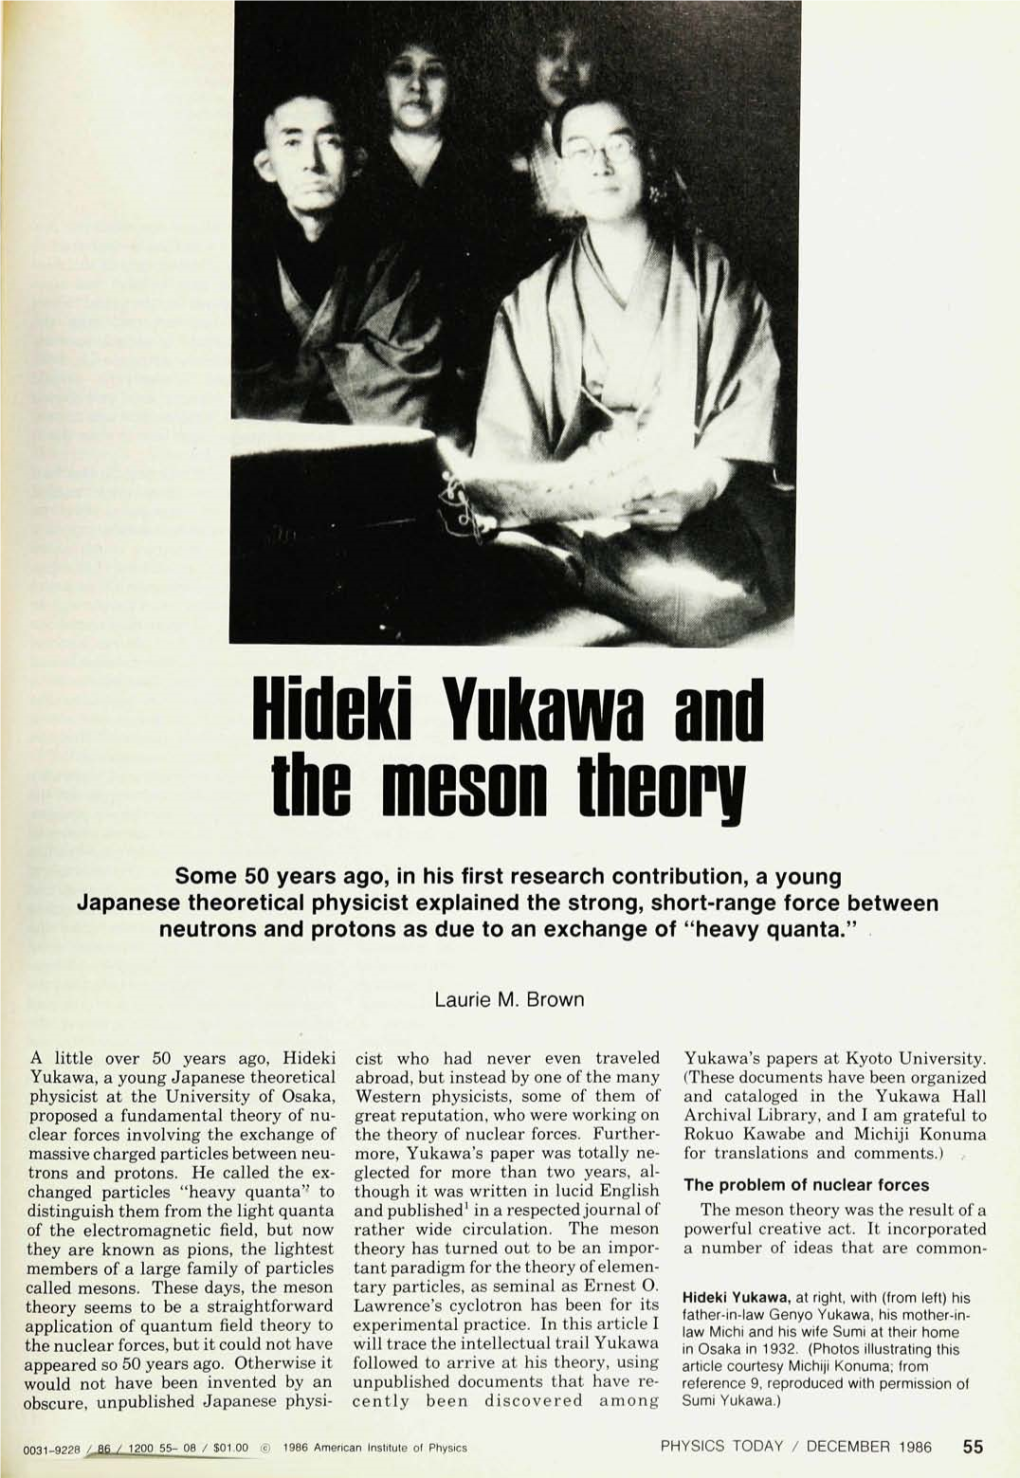 Hideki Yukawa and the Meson Theory